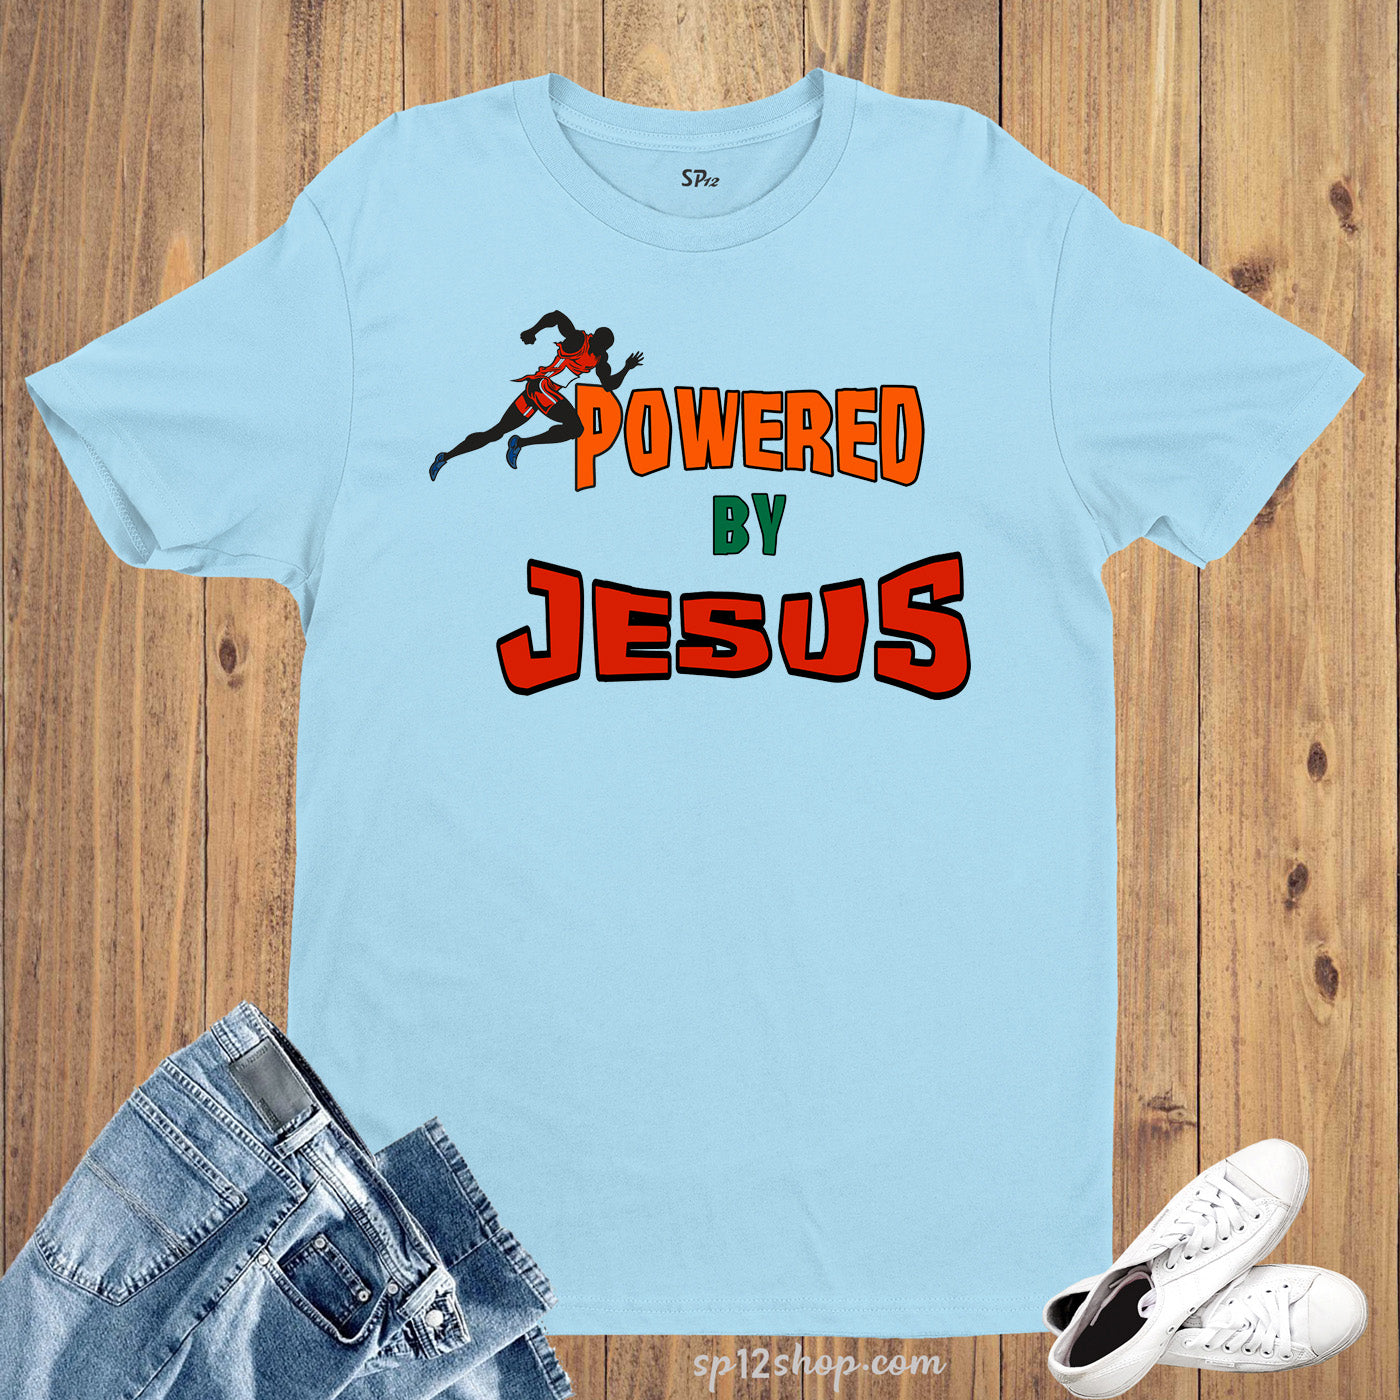 Gym Fitness Crossfit T shirt Powered By Jesus Sports Run tshirt tee